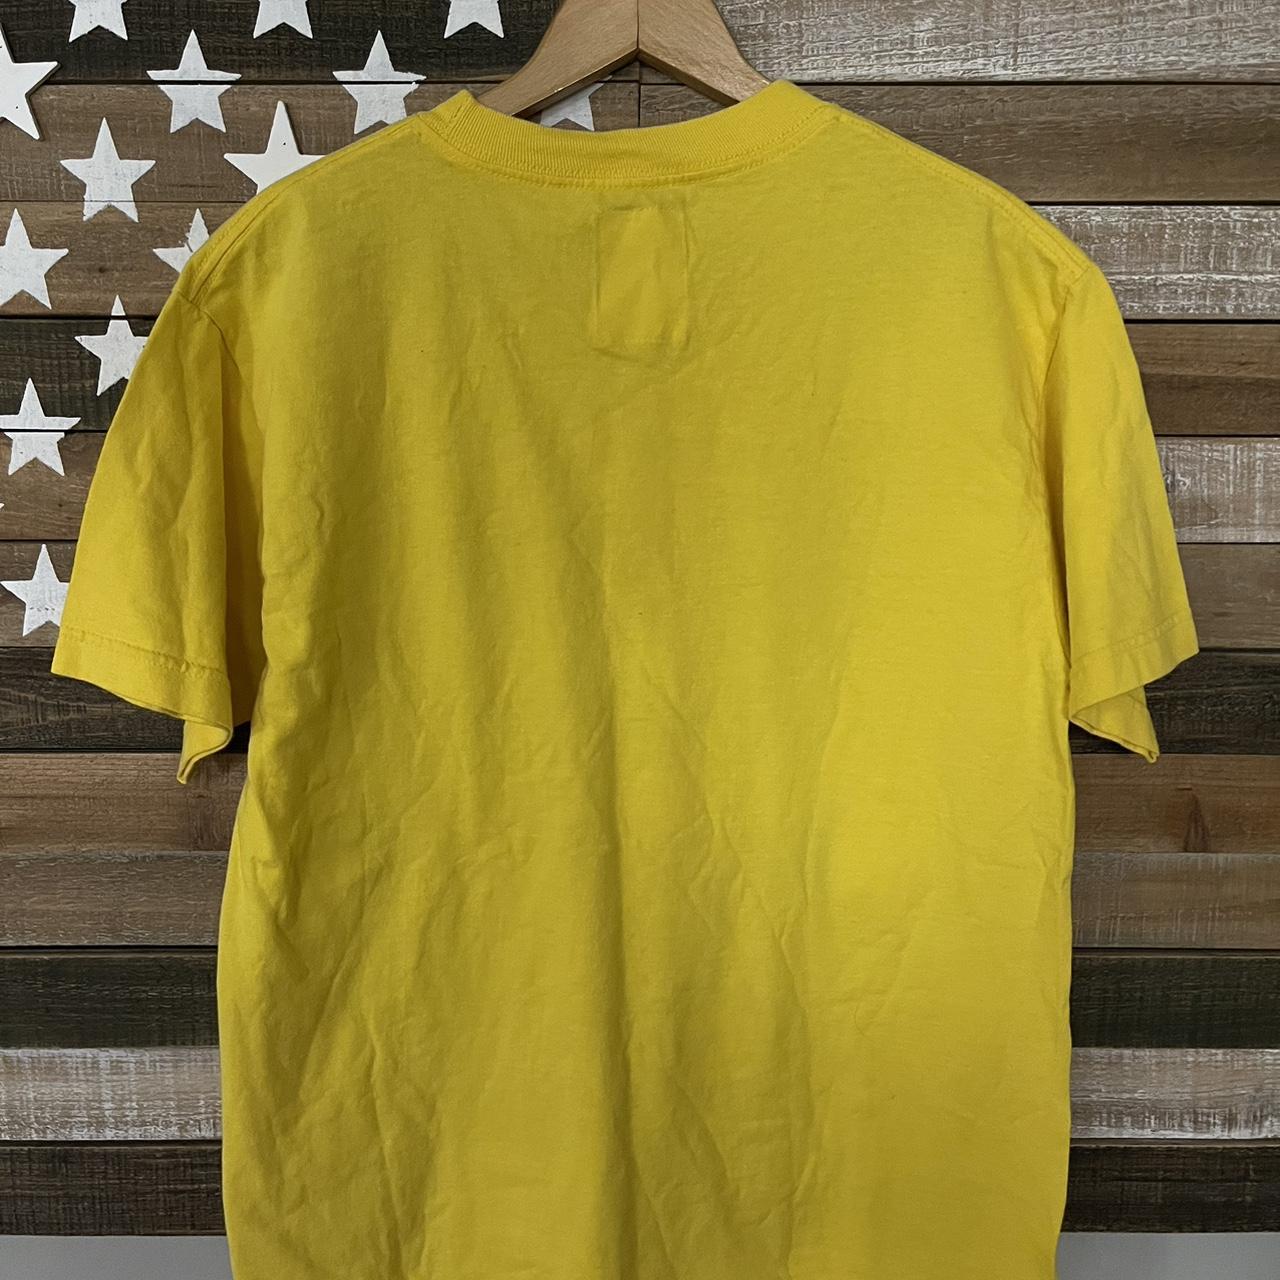 Alife Men's Yellow T-shirt (2)